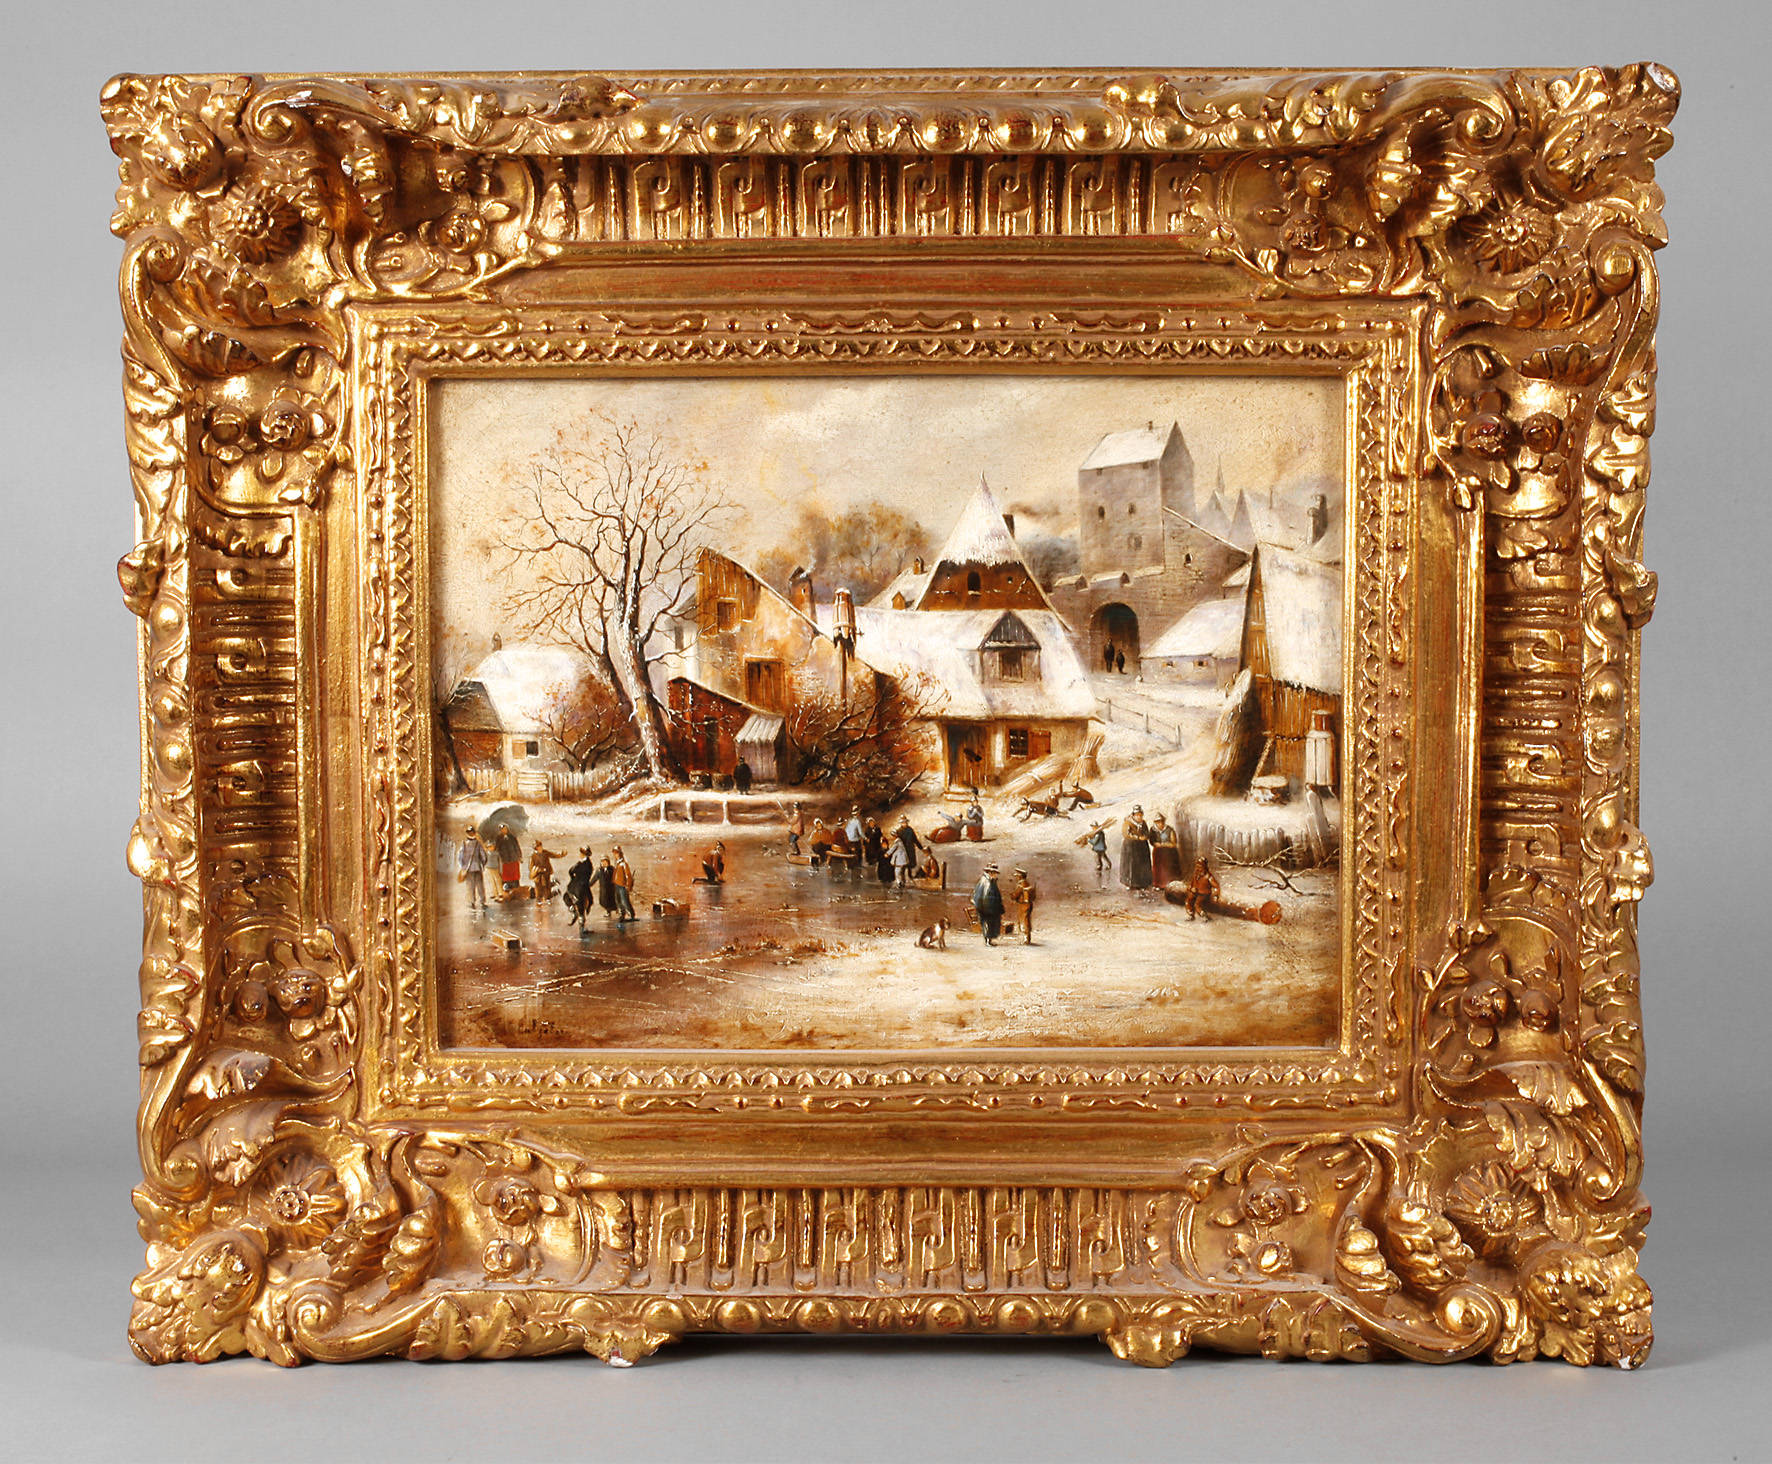 Calzolari, Szene vor dem Stadttor, nach Brueghel